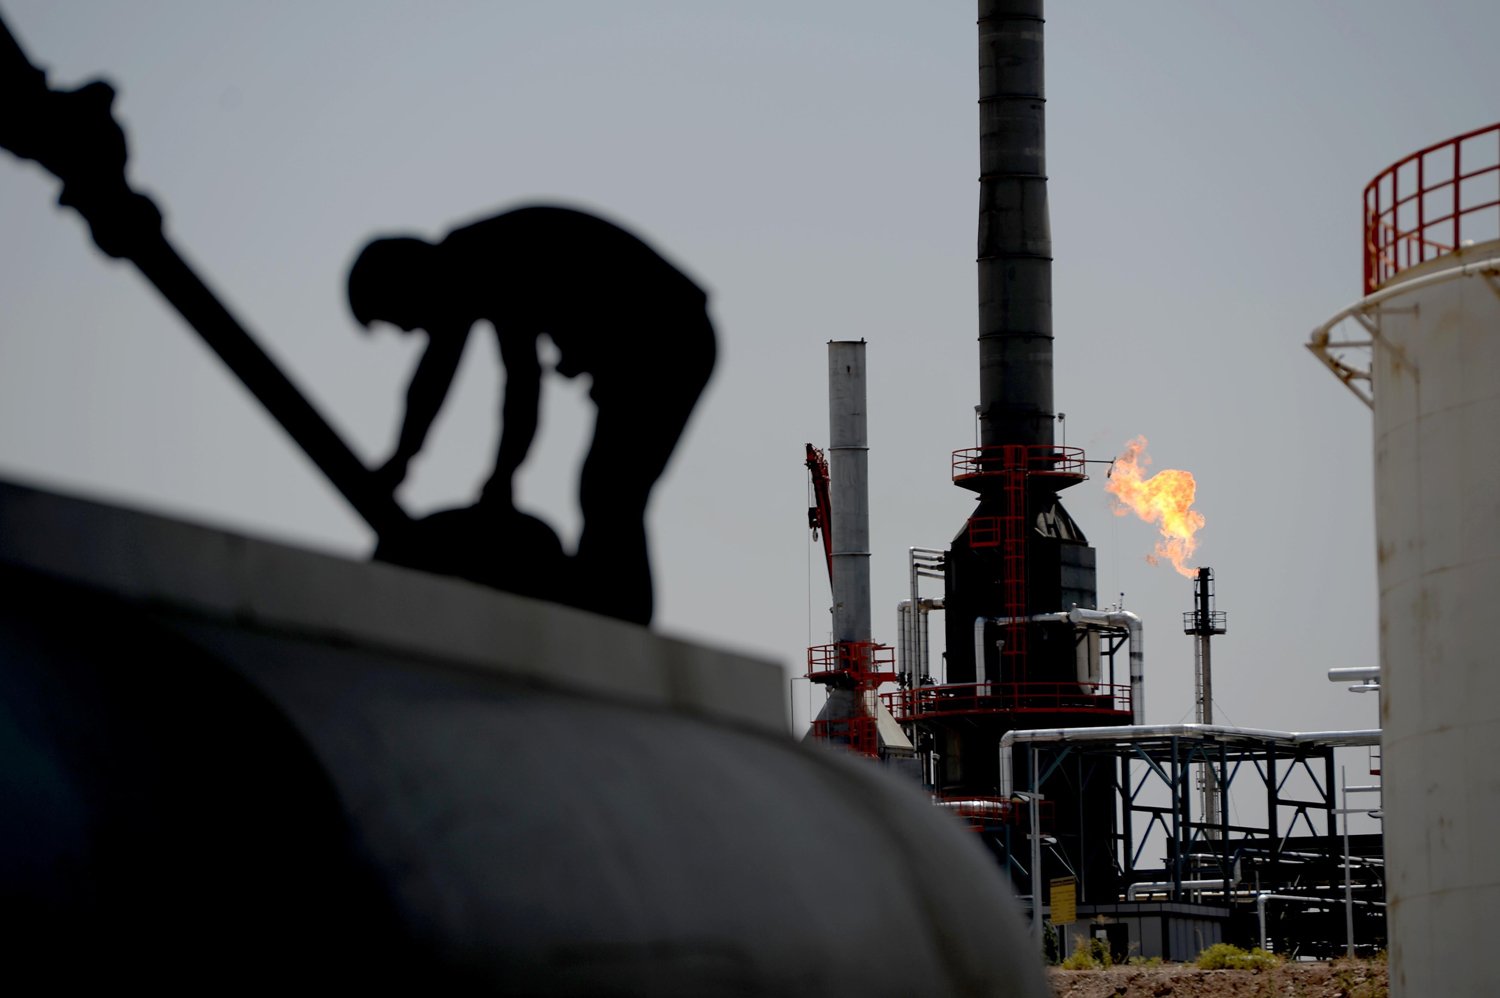 Erbil refinery in Iraq, seen in June 2014.